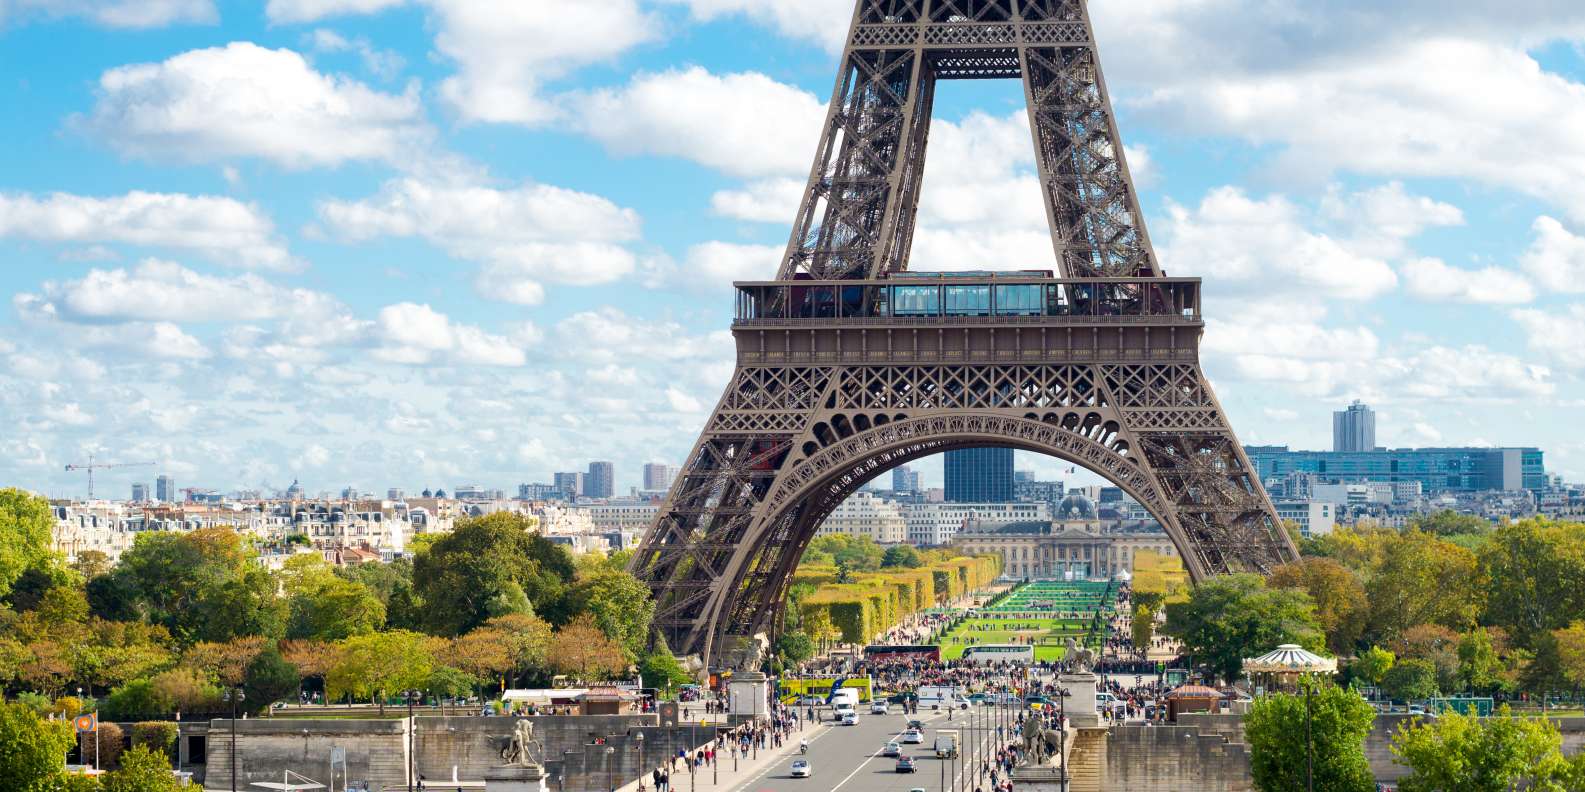 The BEST Eiffel Tower 1st Floor Architecture 2023 - FREE Cancellation ...